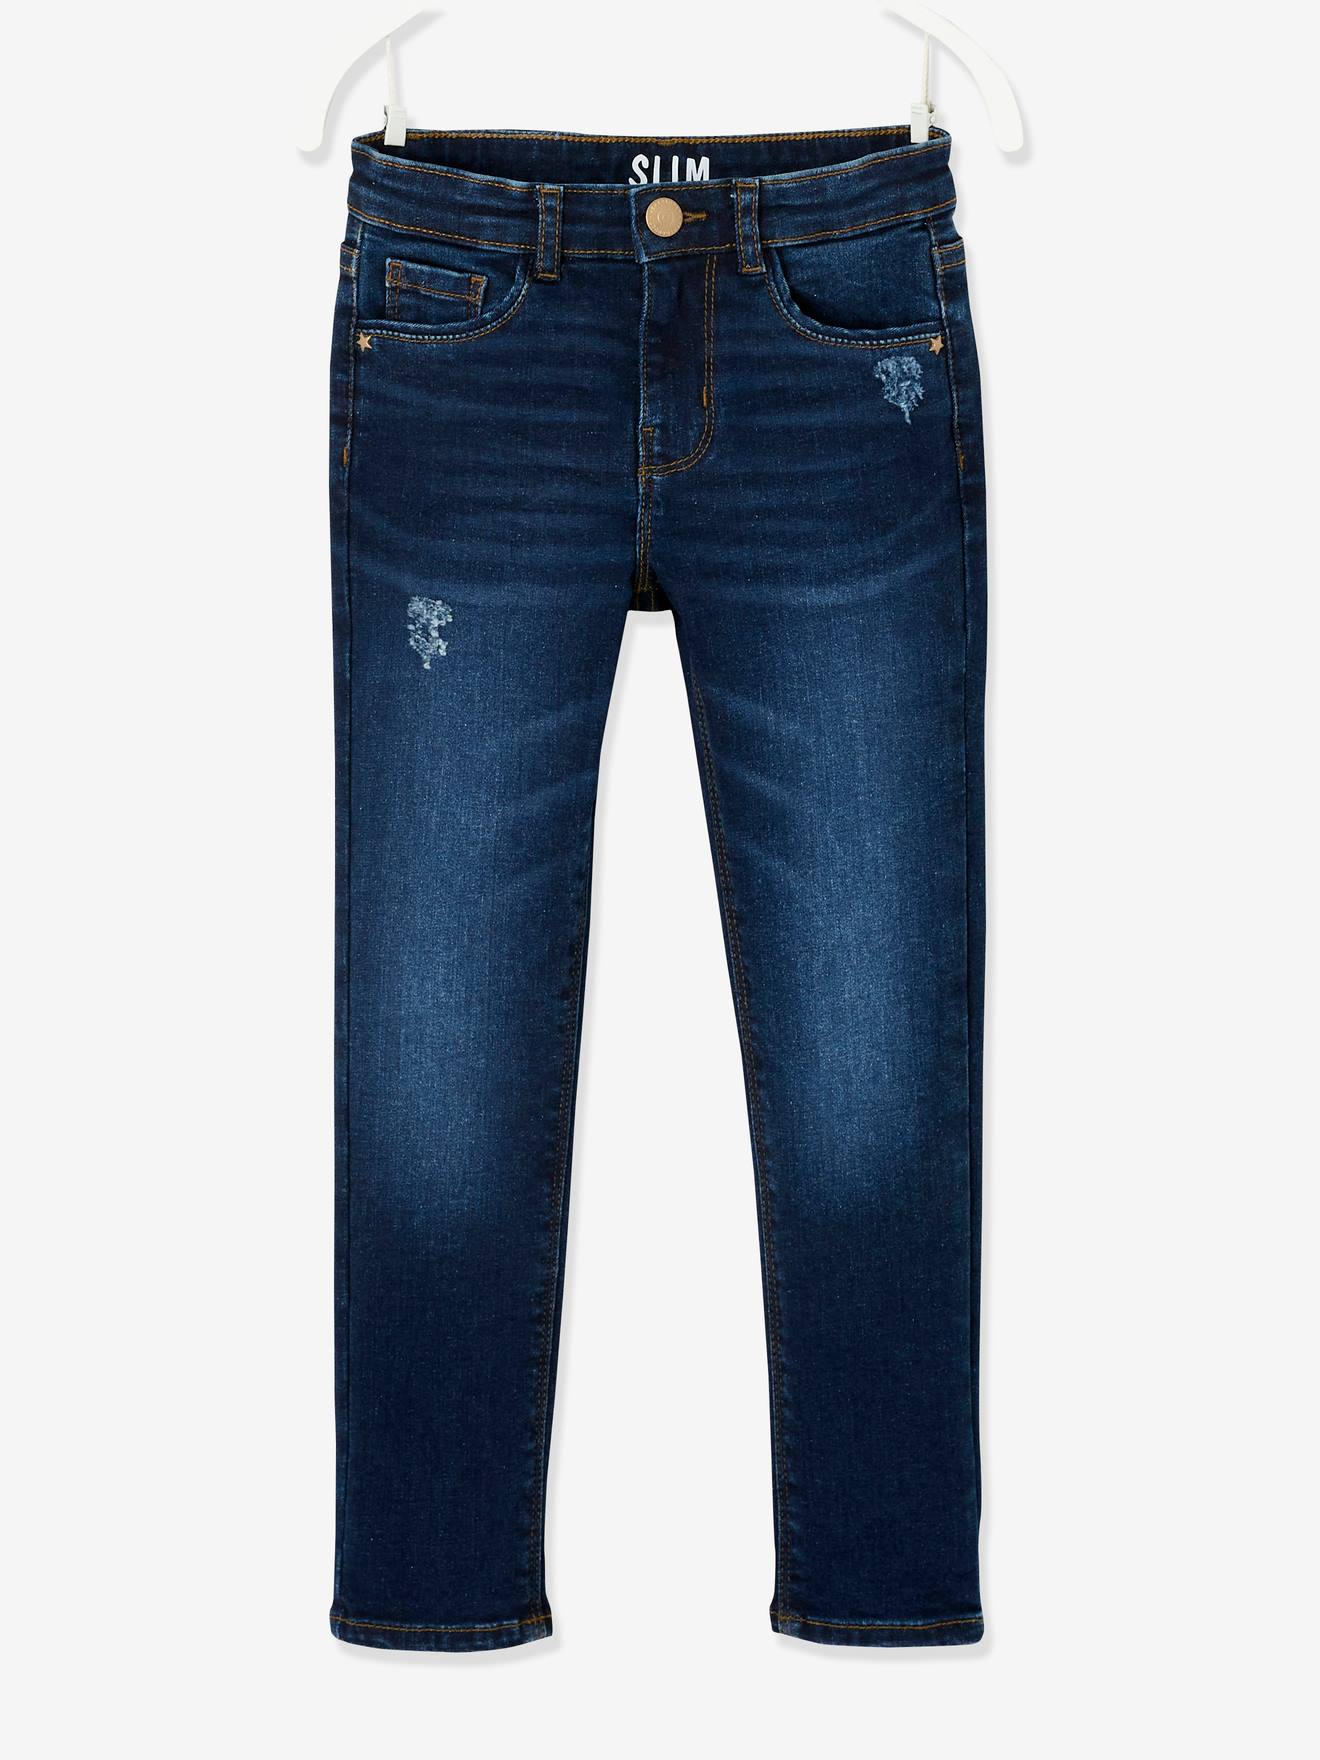 MEDIUM Hip MorphologiK Slim Leg Waterless & Distressed Jeans for Girls -  denim blue